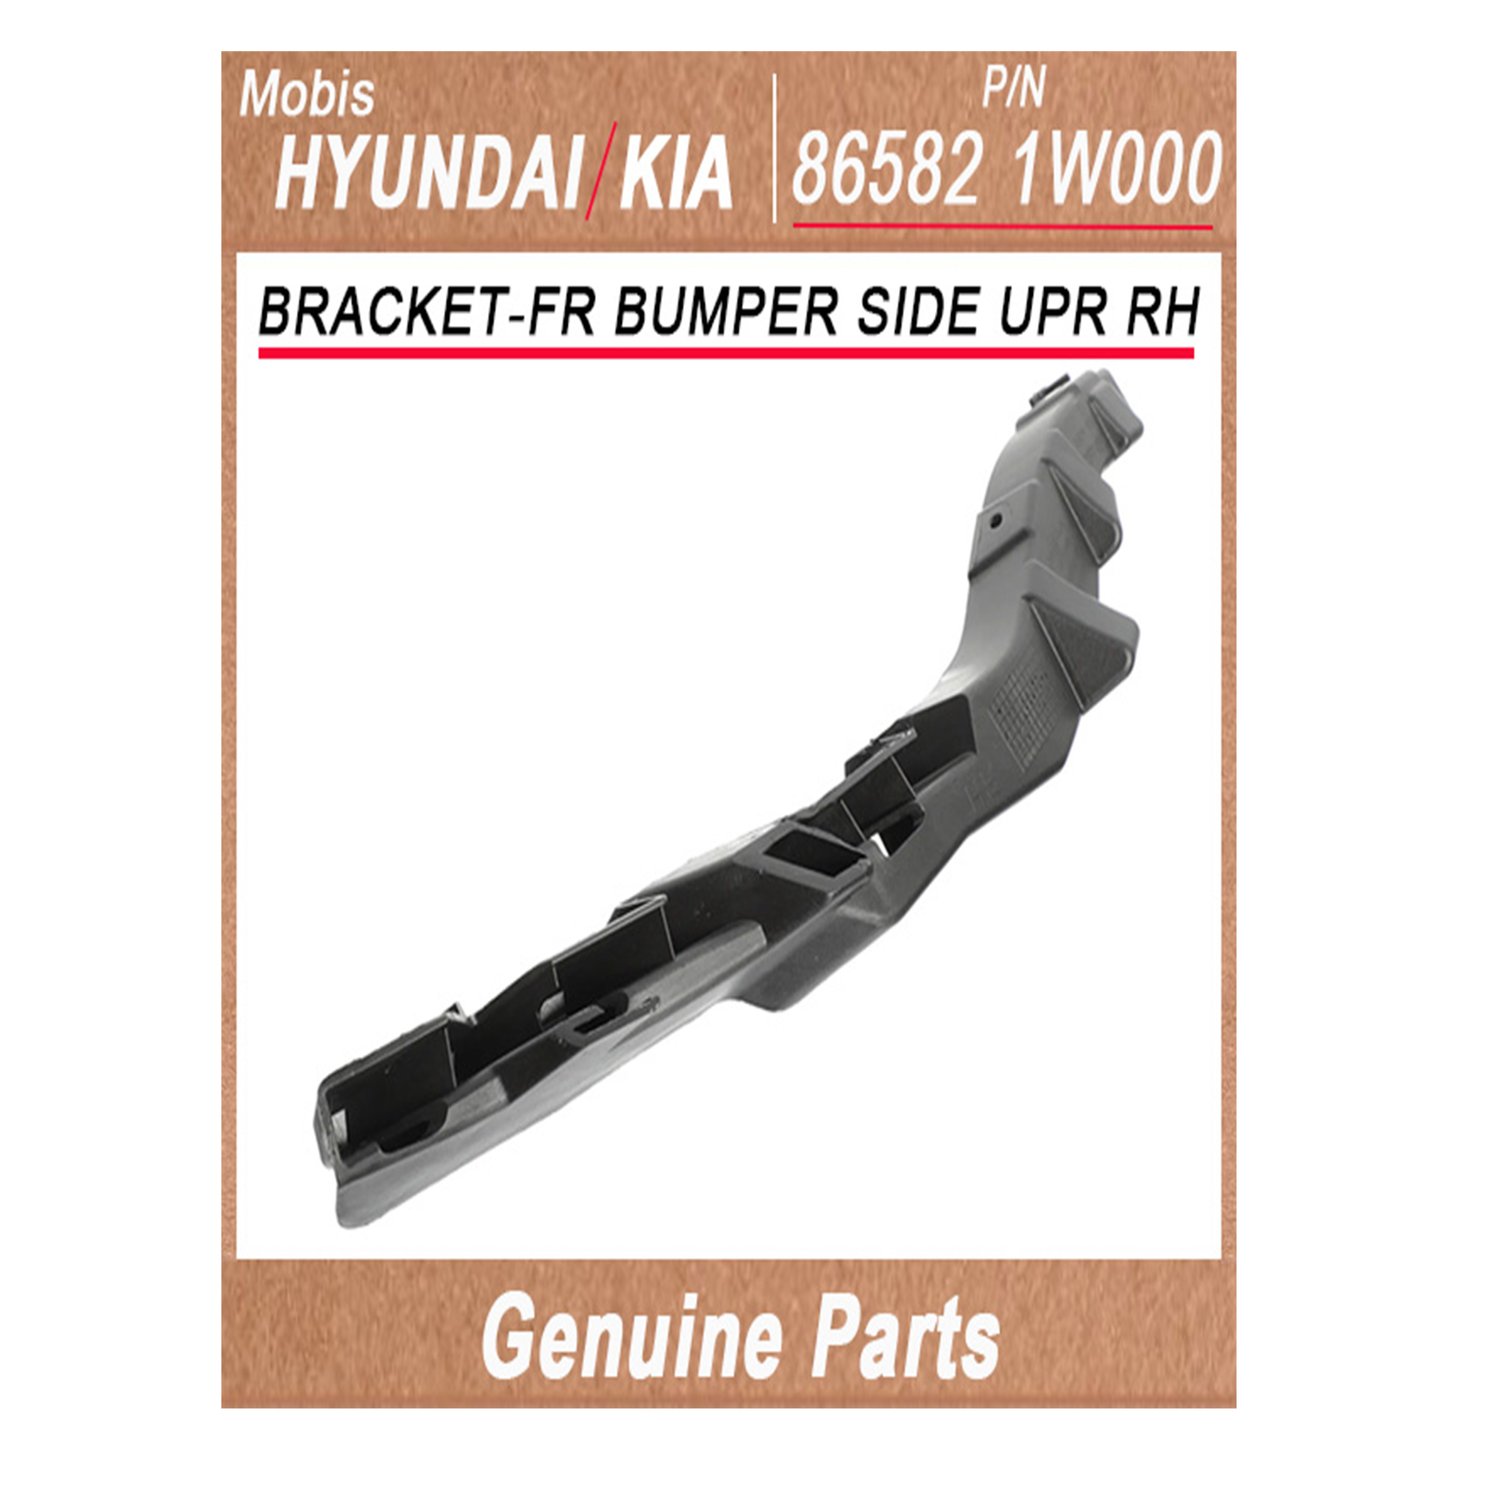 865821W000 _ BRACKET_FR BUMPER SIDE UPR RH _ Genuine Korean Automotive Spare Parts _ Hyundai Kia _Mo